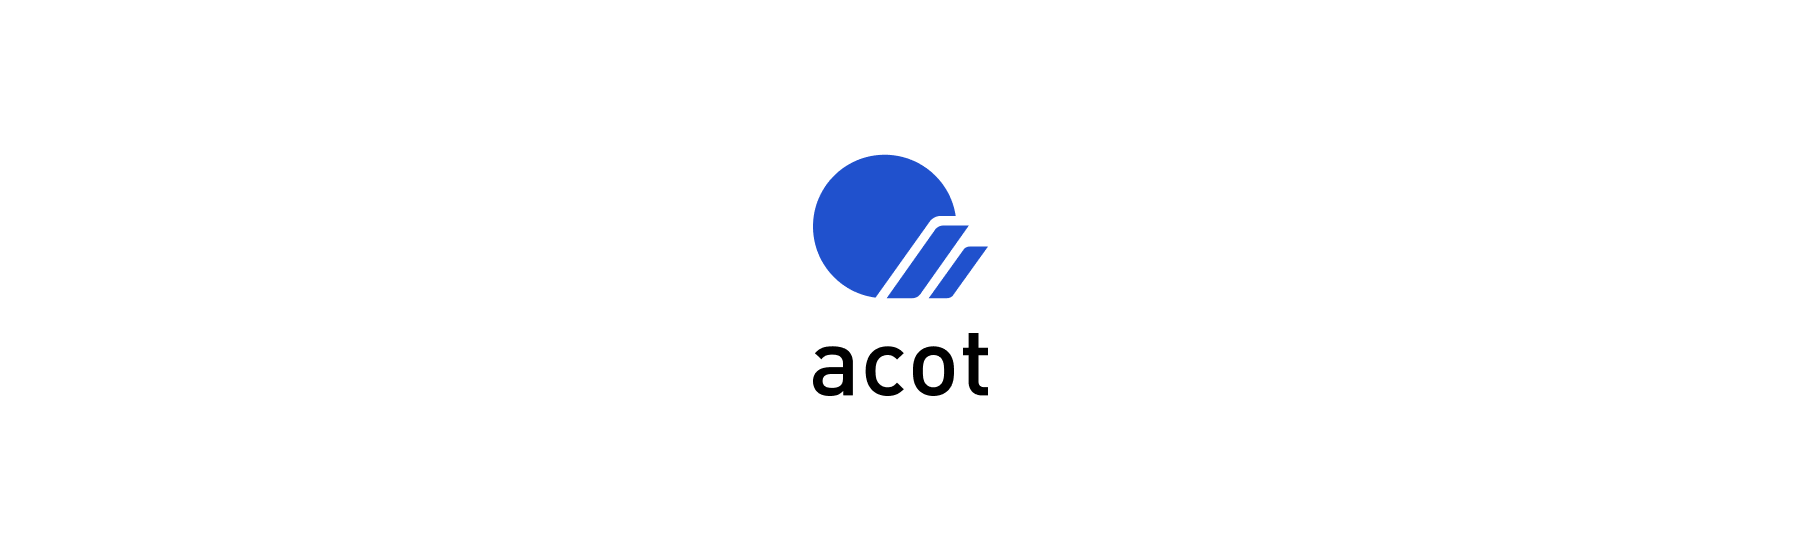 acot - Accessibility Testing Framework